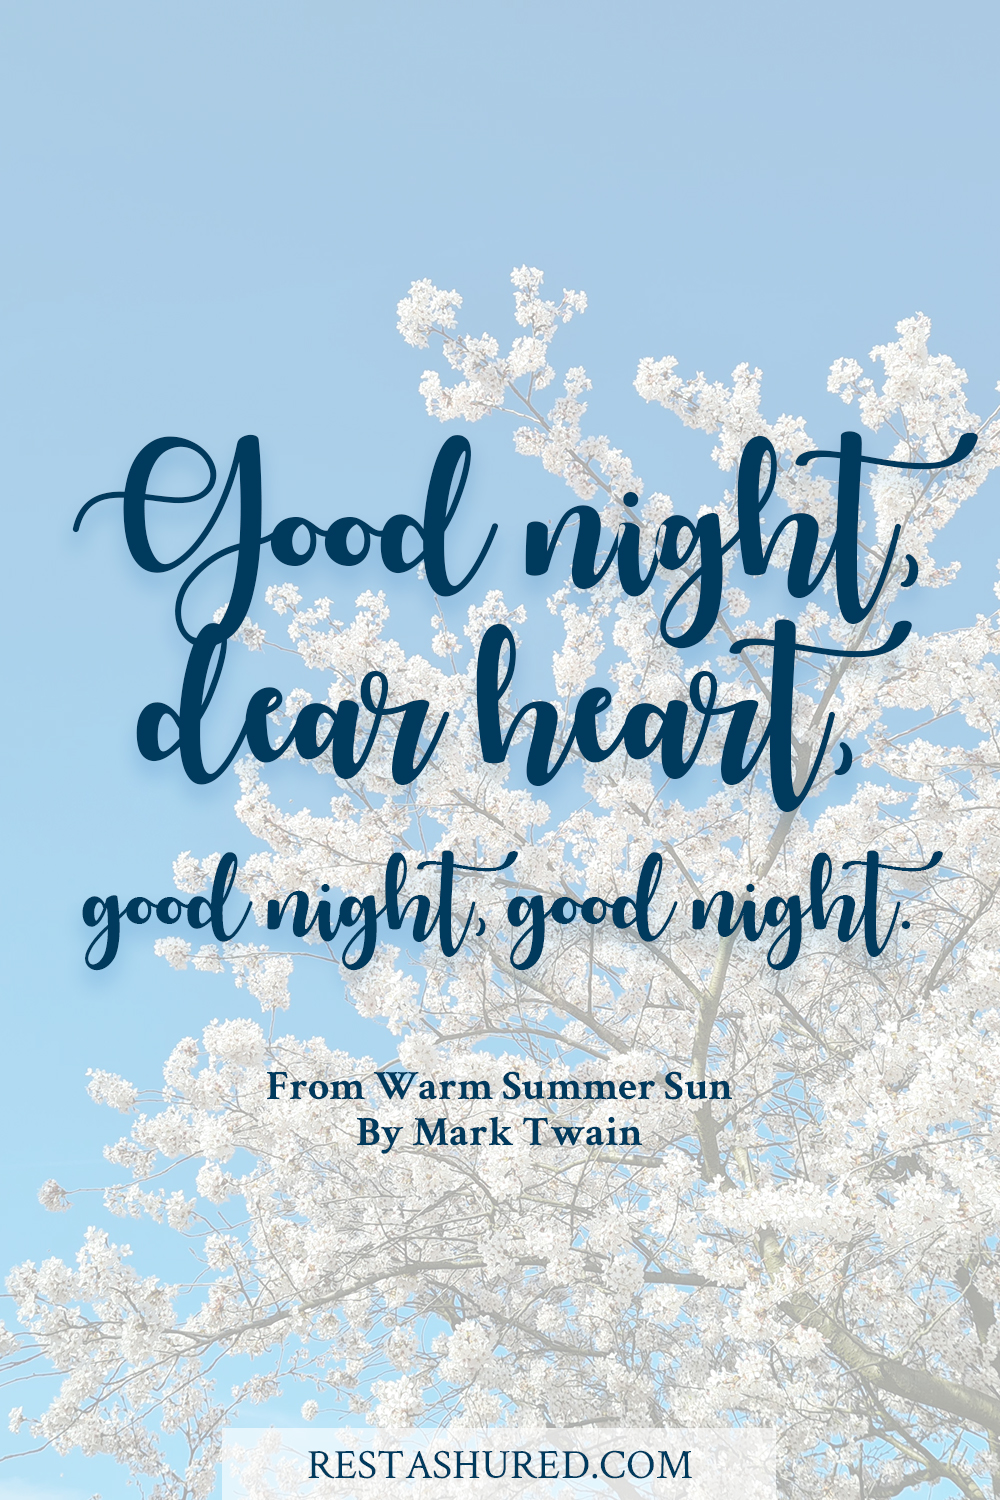 Poem - Warm Summer Sun by Mark Twain